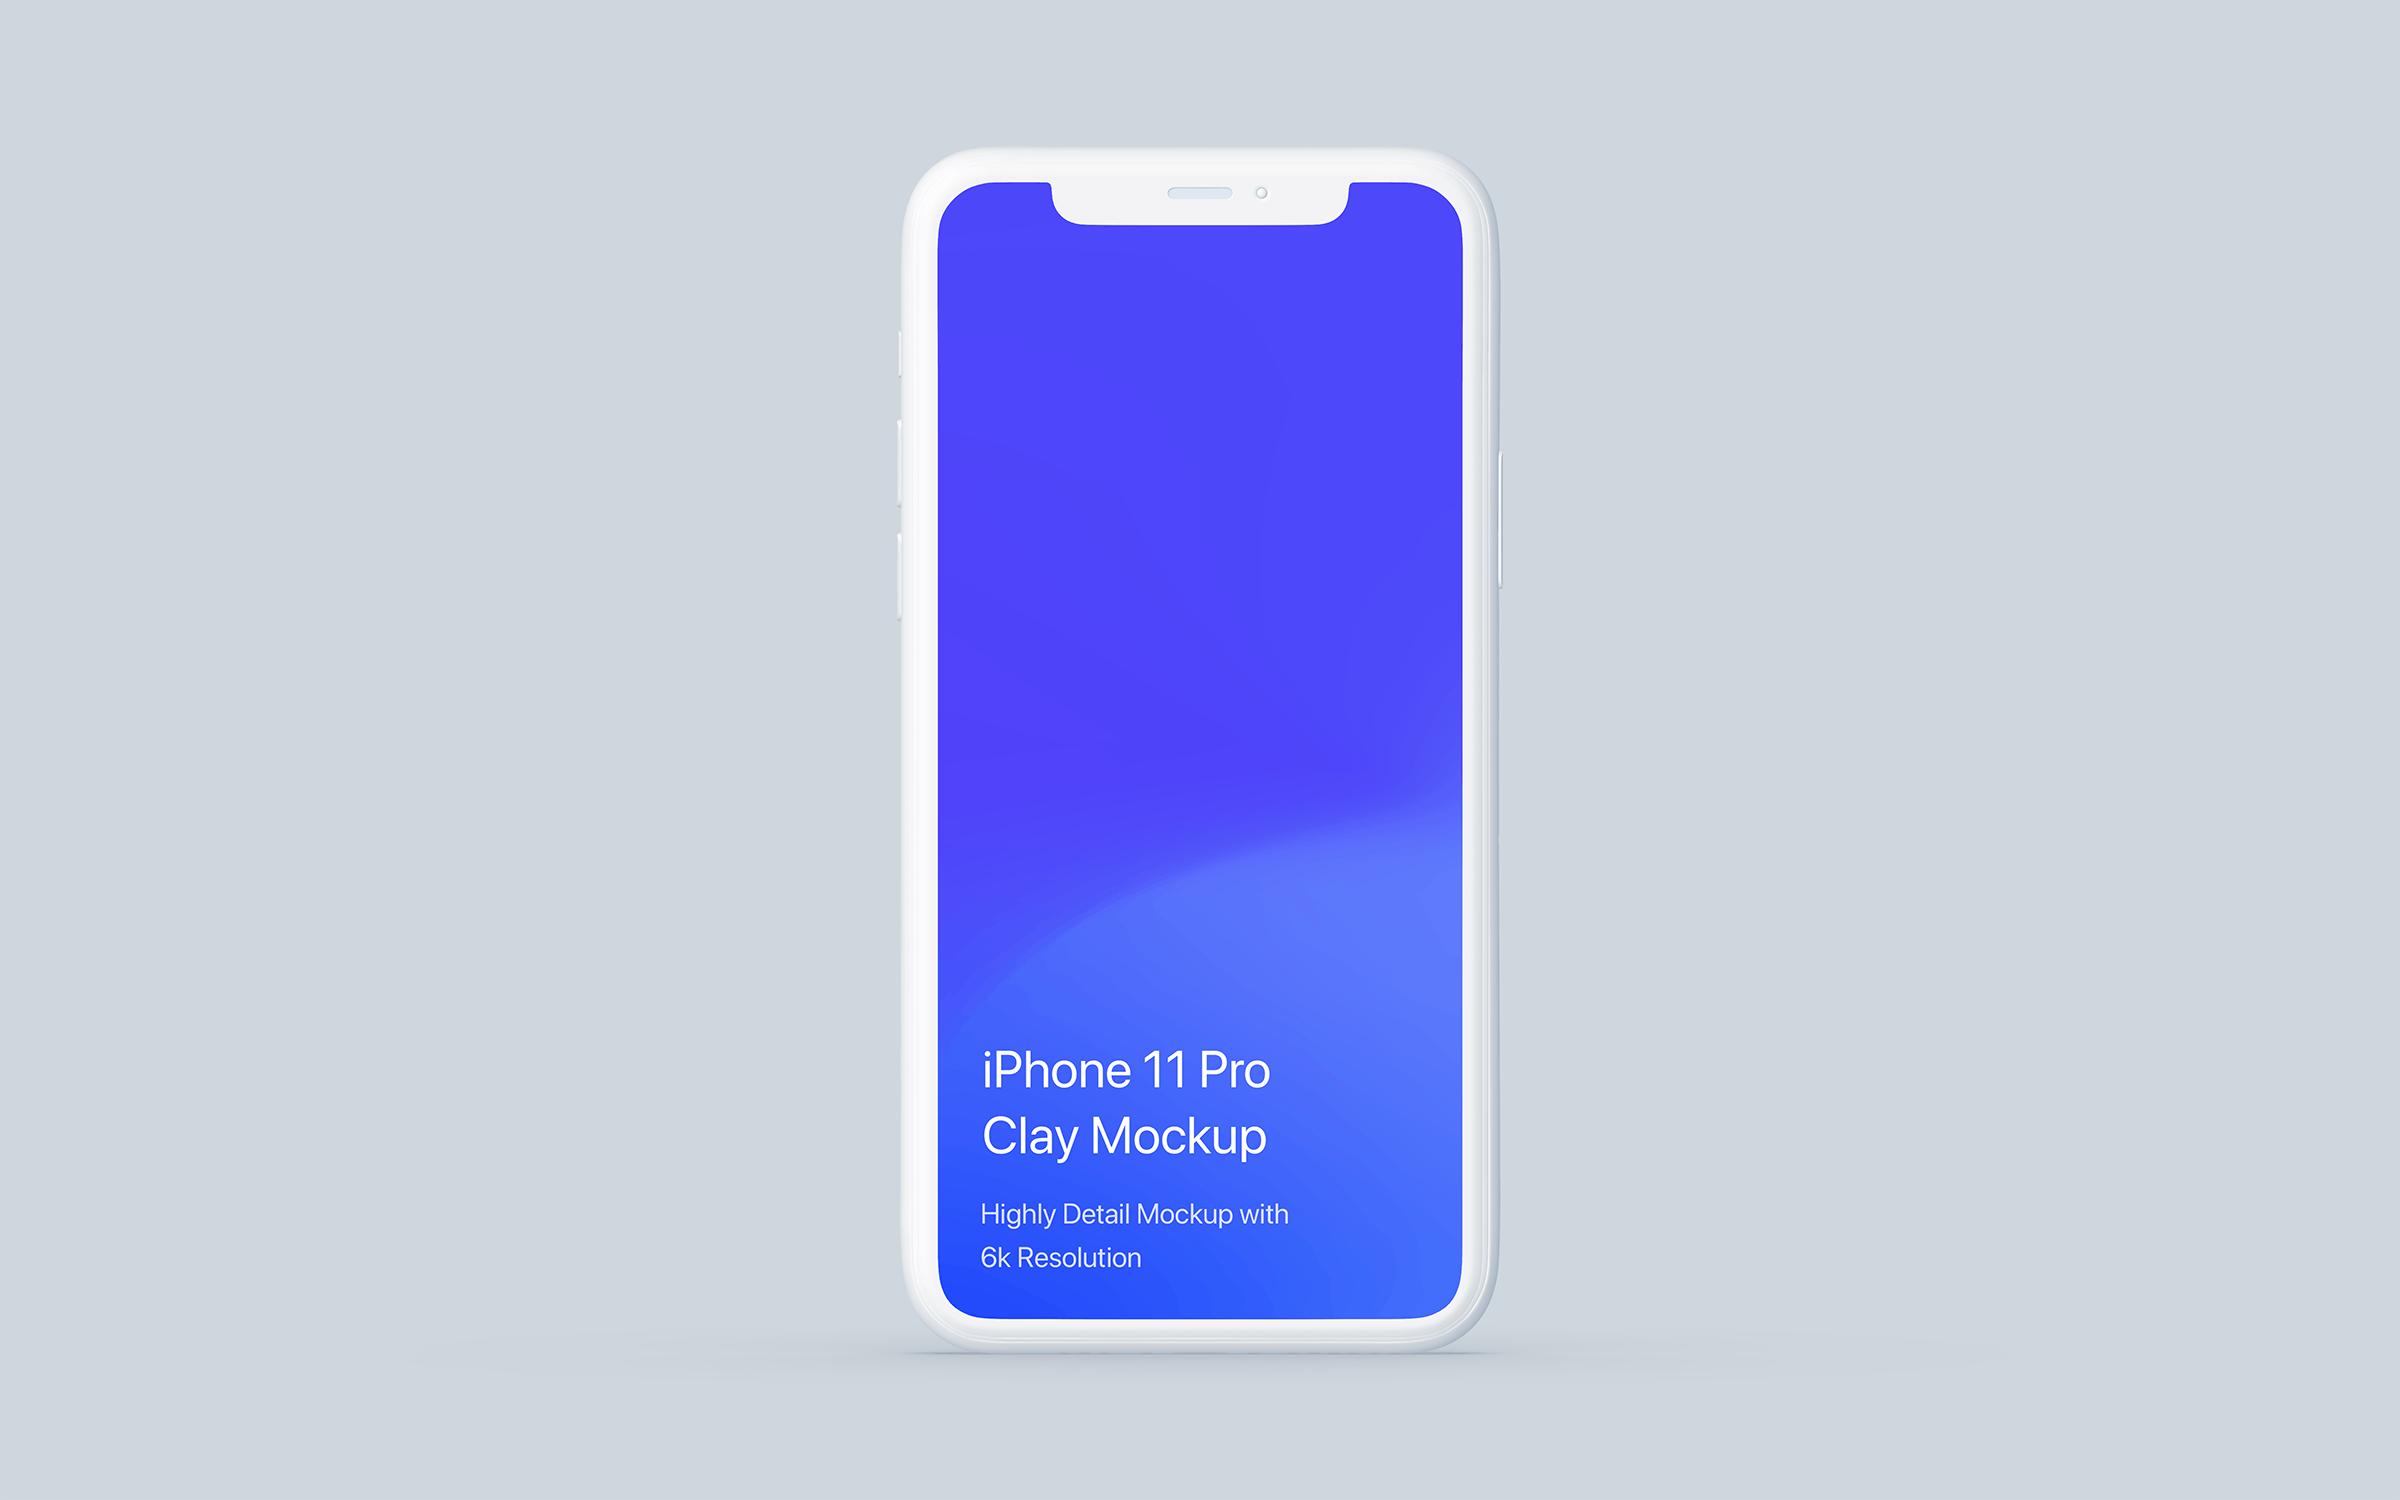 黏土陶瓷风格iPhone 11 Pro手机普贤居精选样机模板 iPhone 11 Pro Mockup – Clay Mockup Pack插图(4)